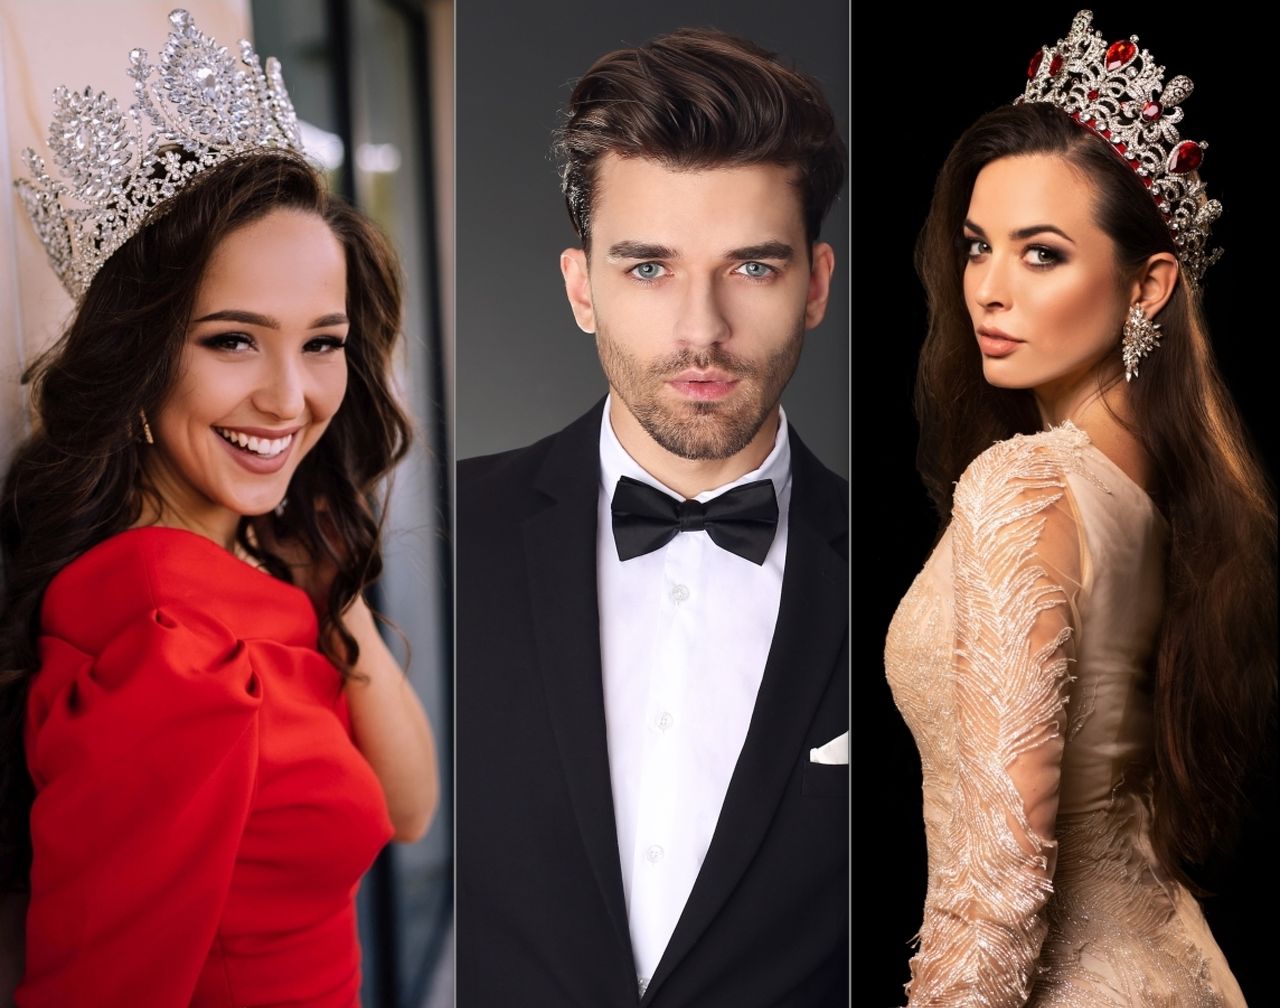 Festiwal Piękna 2019 na żywo w Polsacie. Miss Supranational 2019, Mister Supranational 2019 i jubileusz 30-lecia Miss Polski